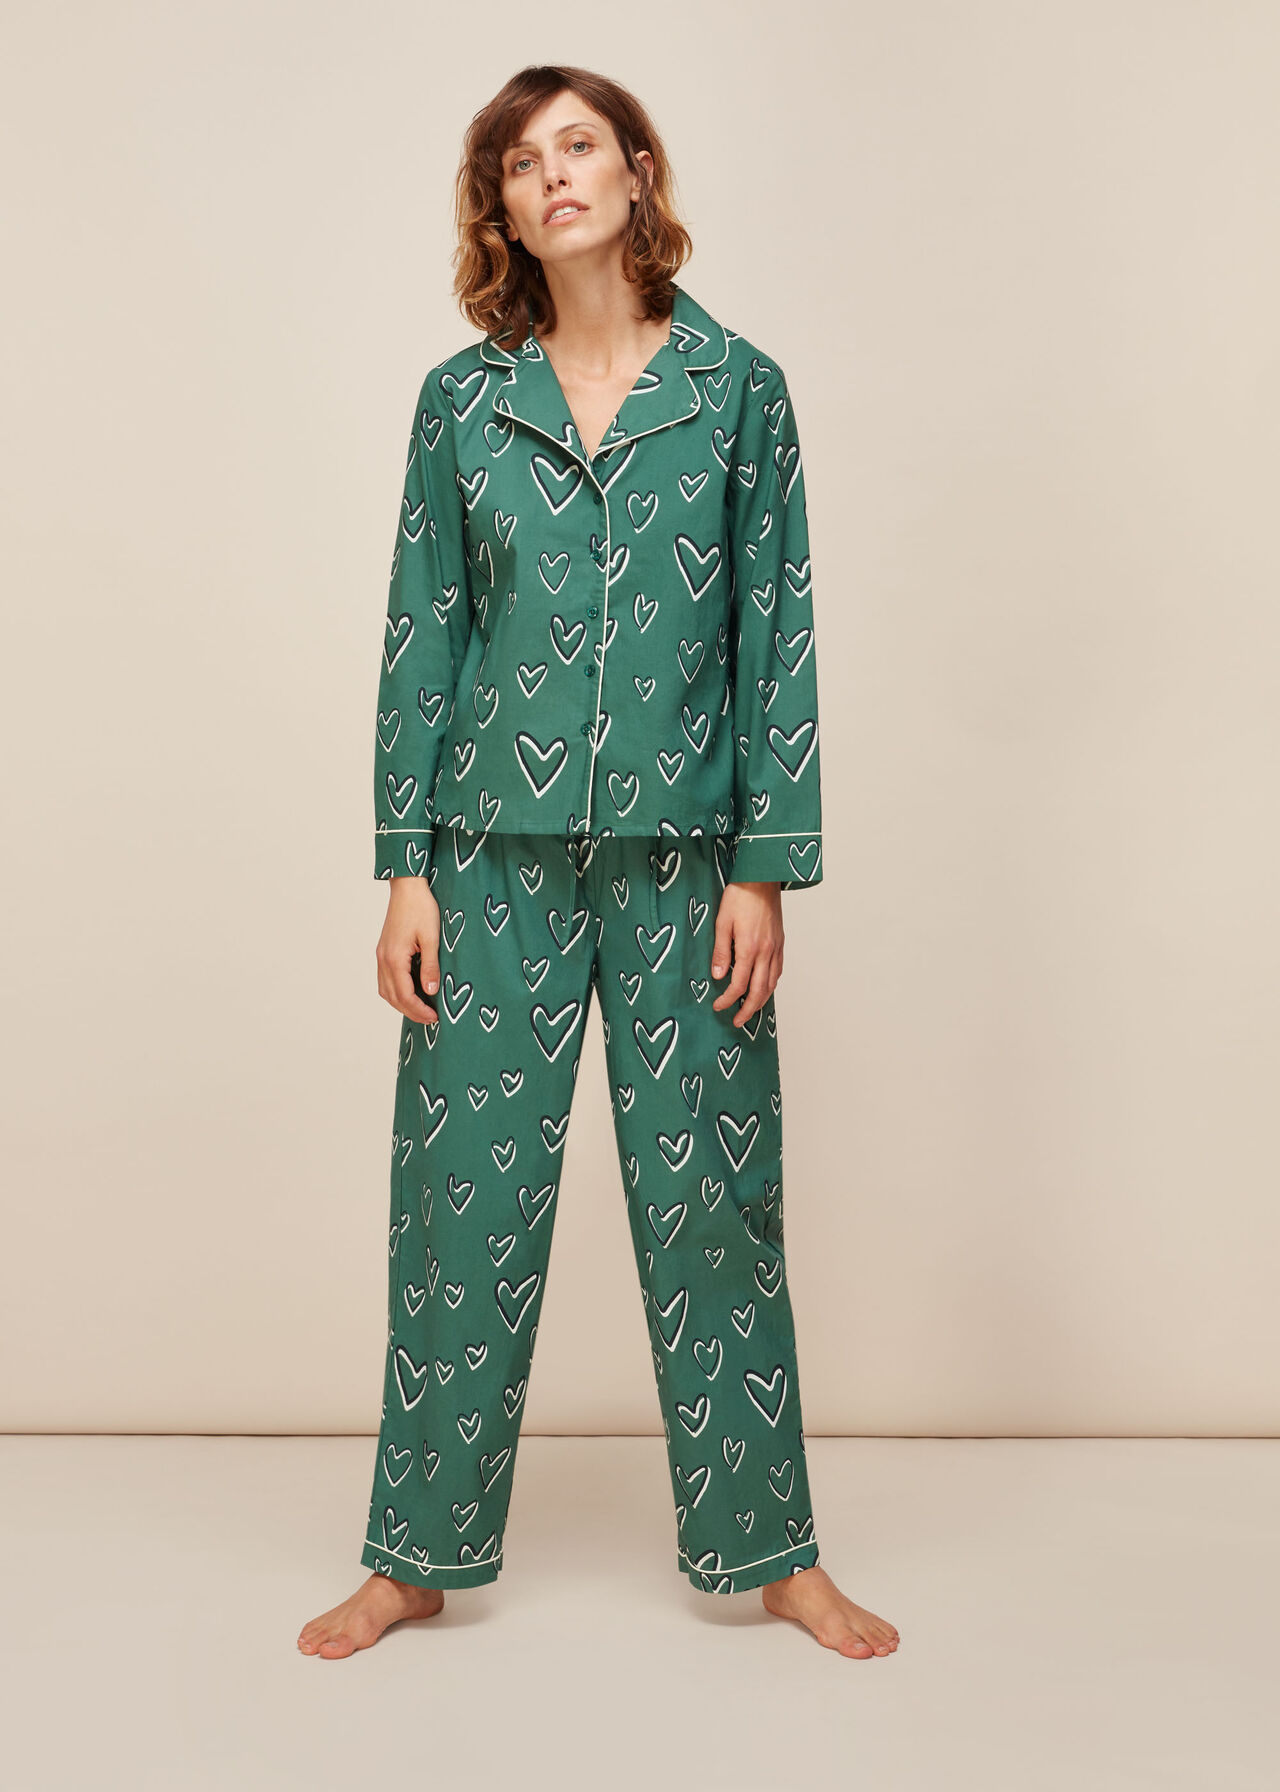 Verstoring Vochtig Chaise longue Green/Multi Heart Print Cotton Pyjama Set | WHISTLES 